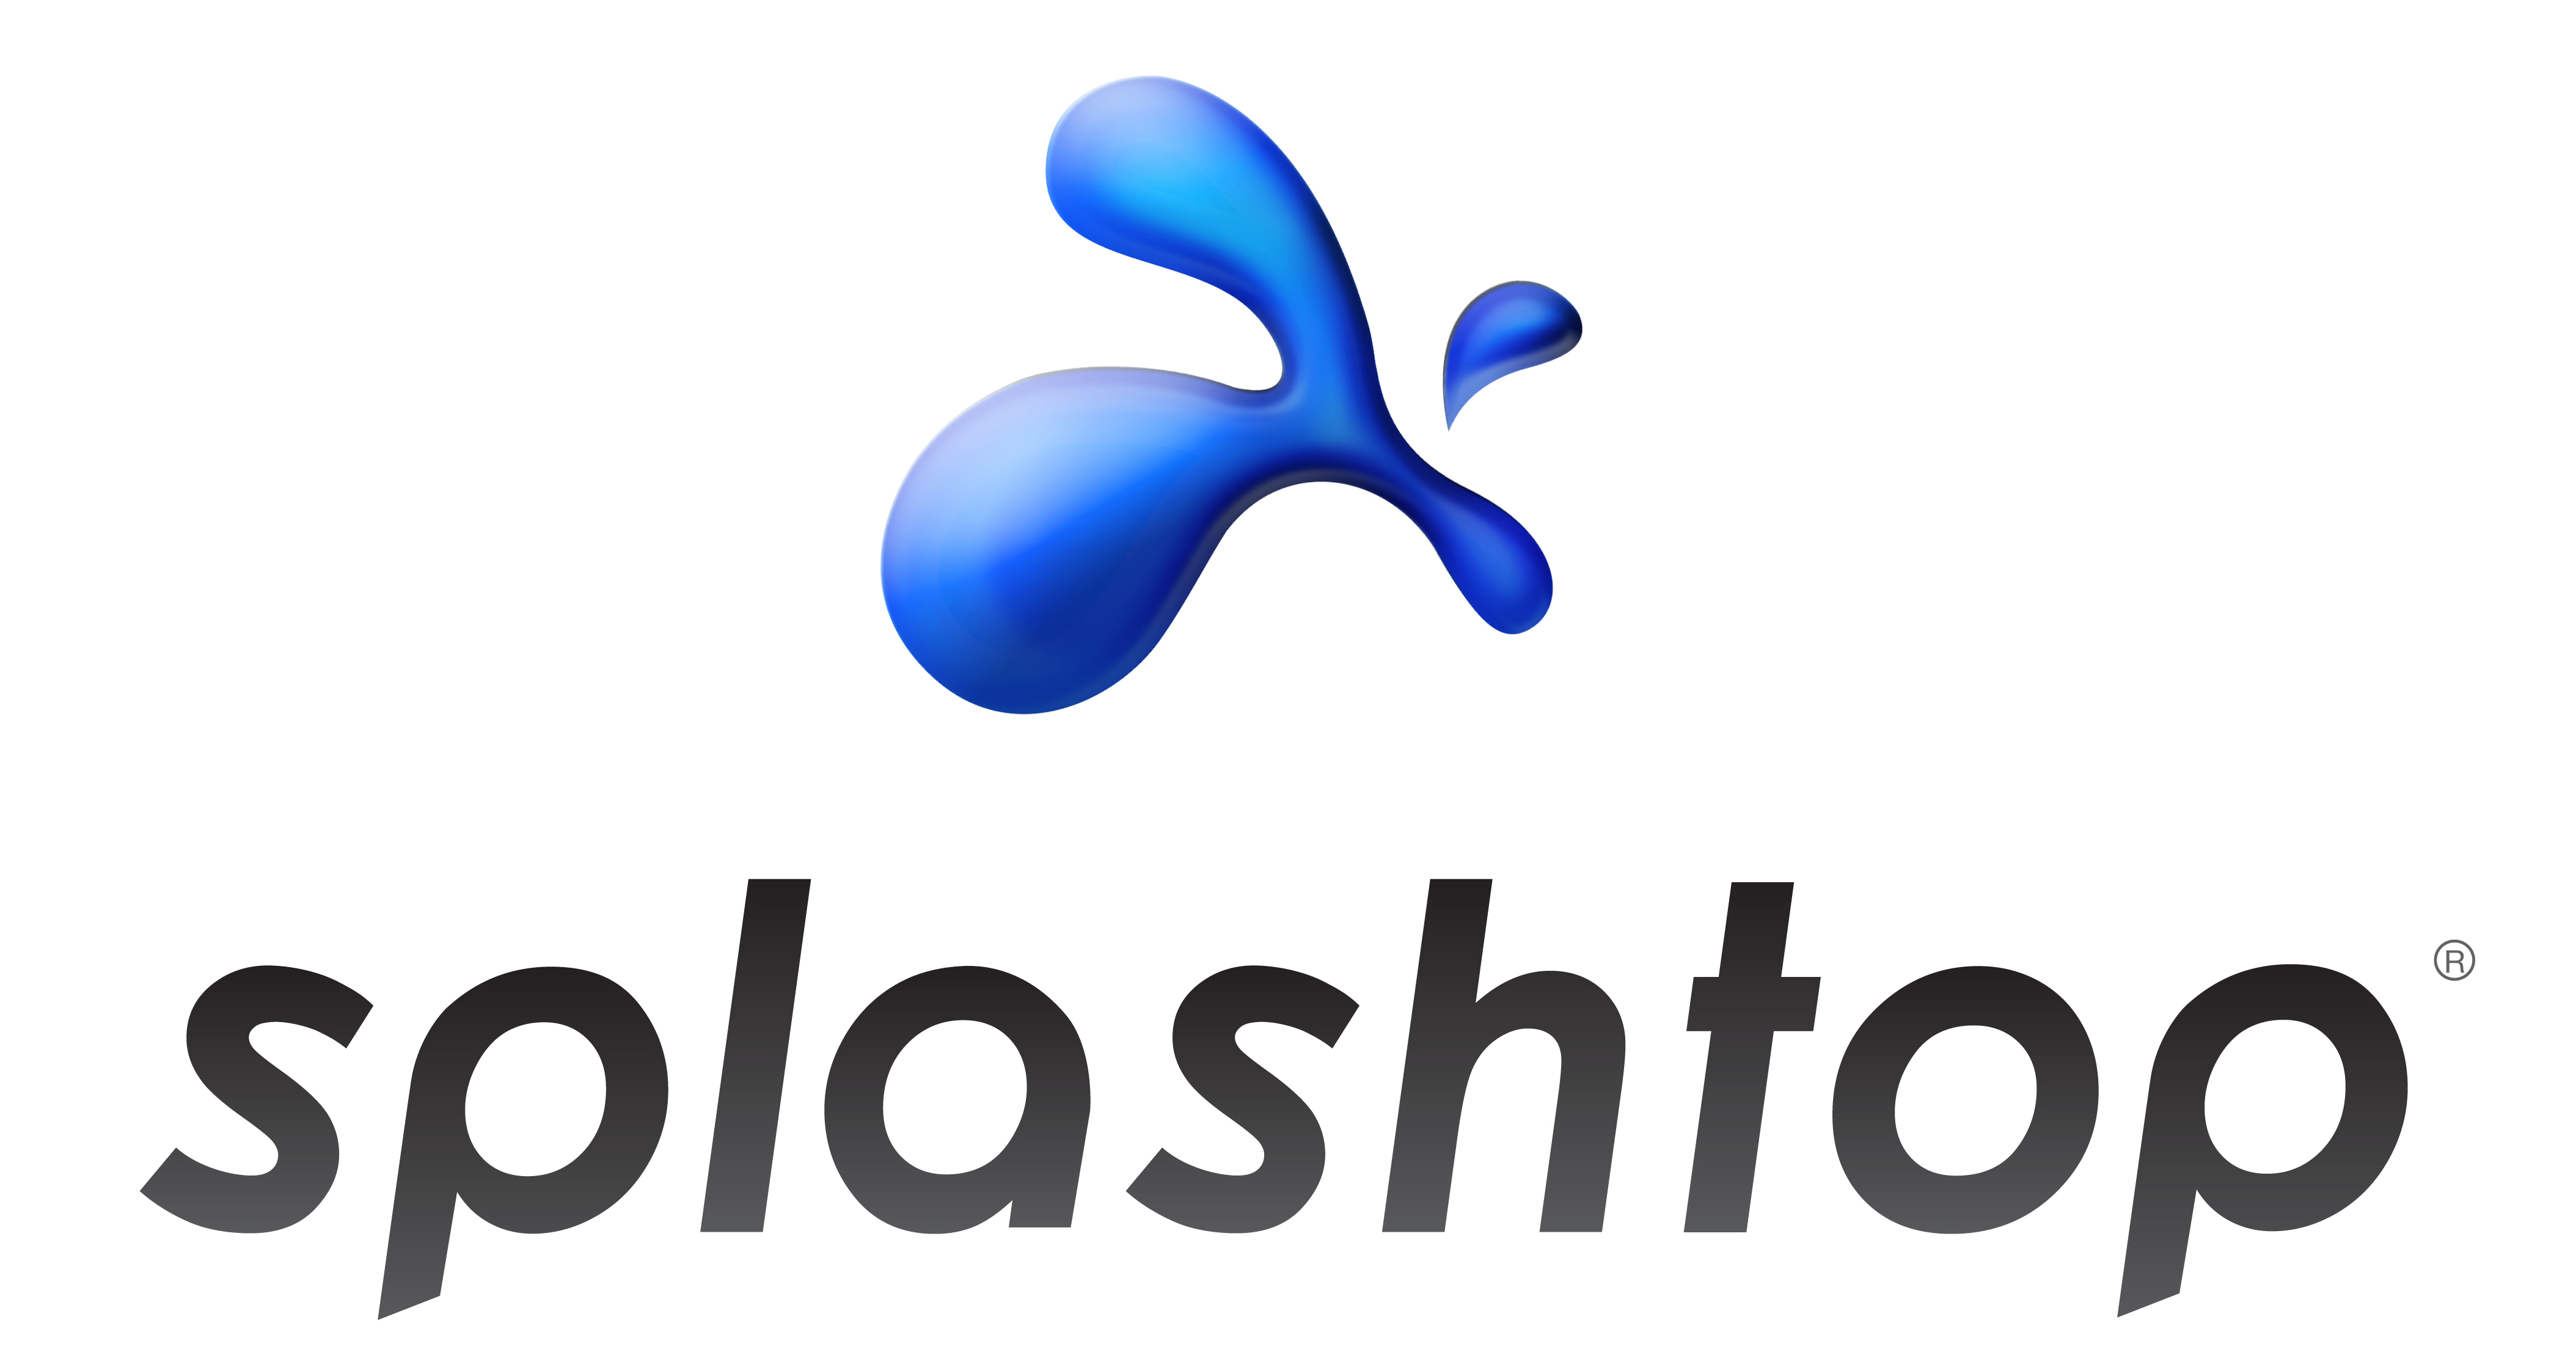 Splashtop #1 Remote Desktop, Collaborate & Support